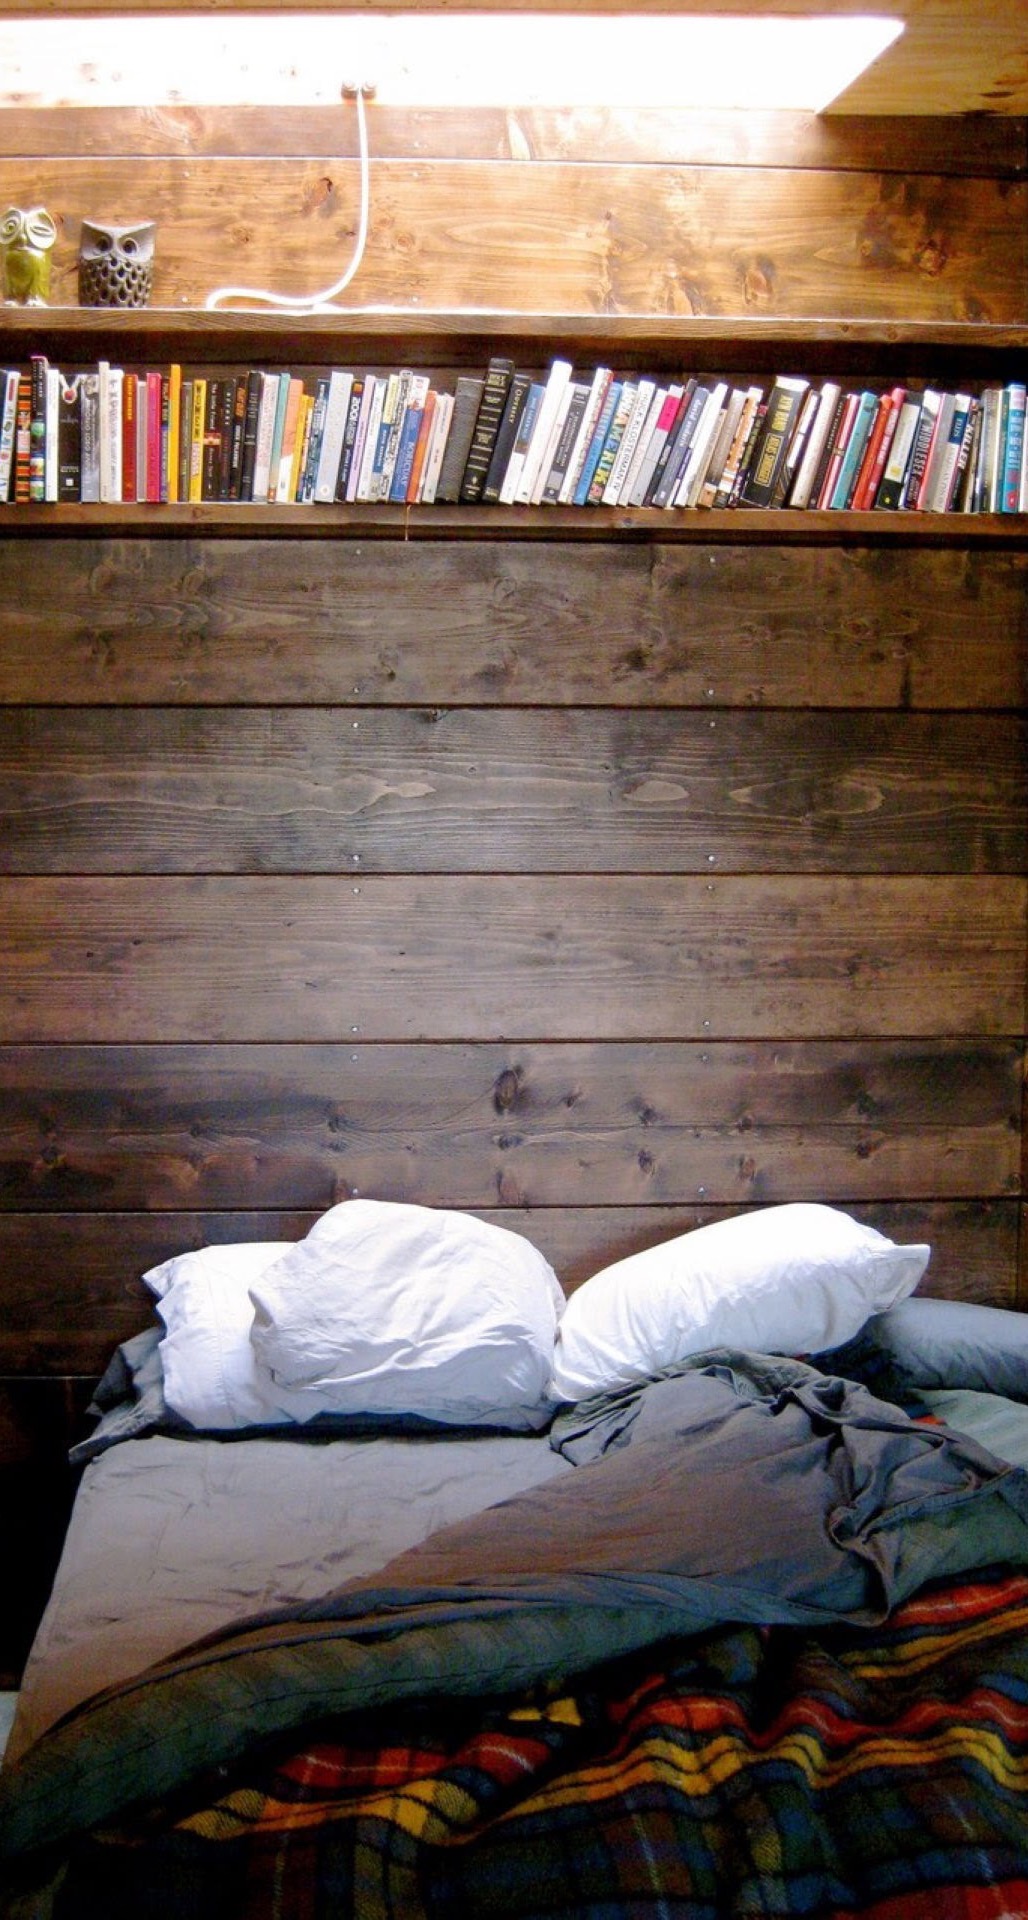 book wallpaper for phone,furniture,room,bed,wood,shelf